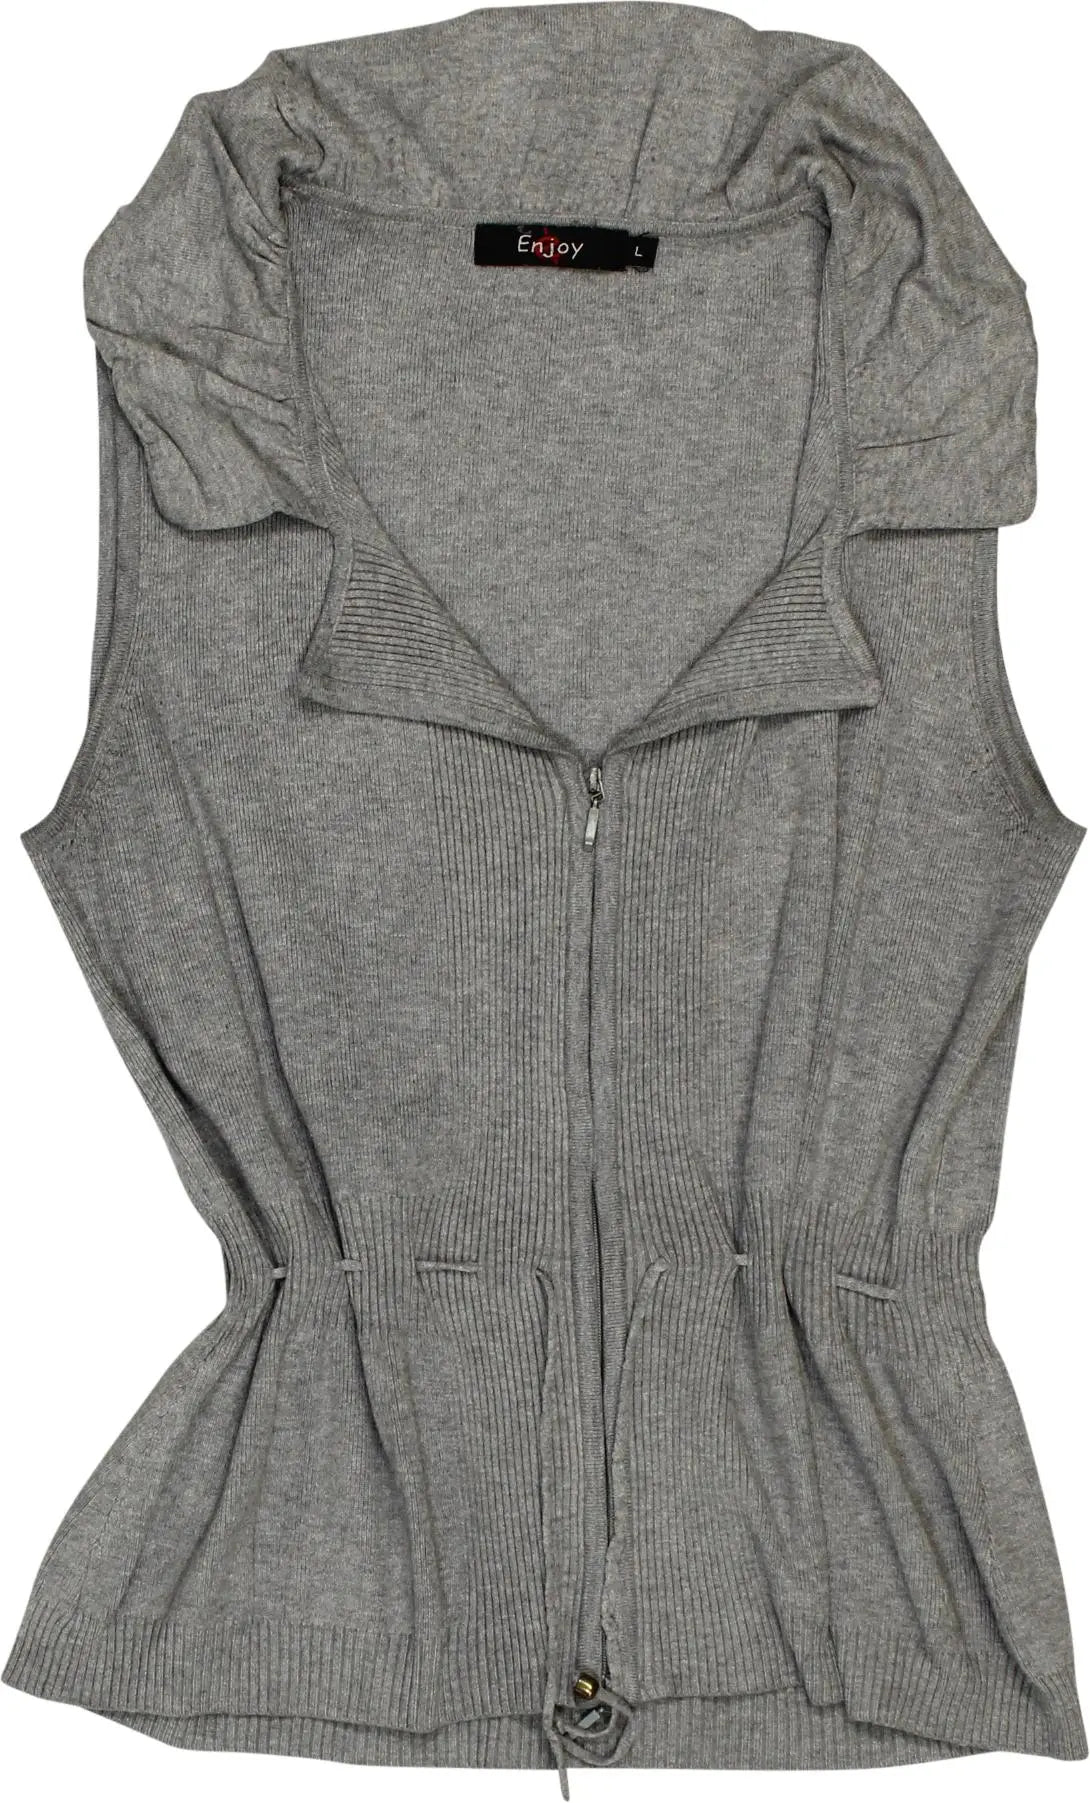 Enjoy - Vest- ThriftTale.com - Vintage and second handclothing